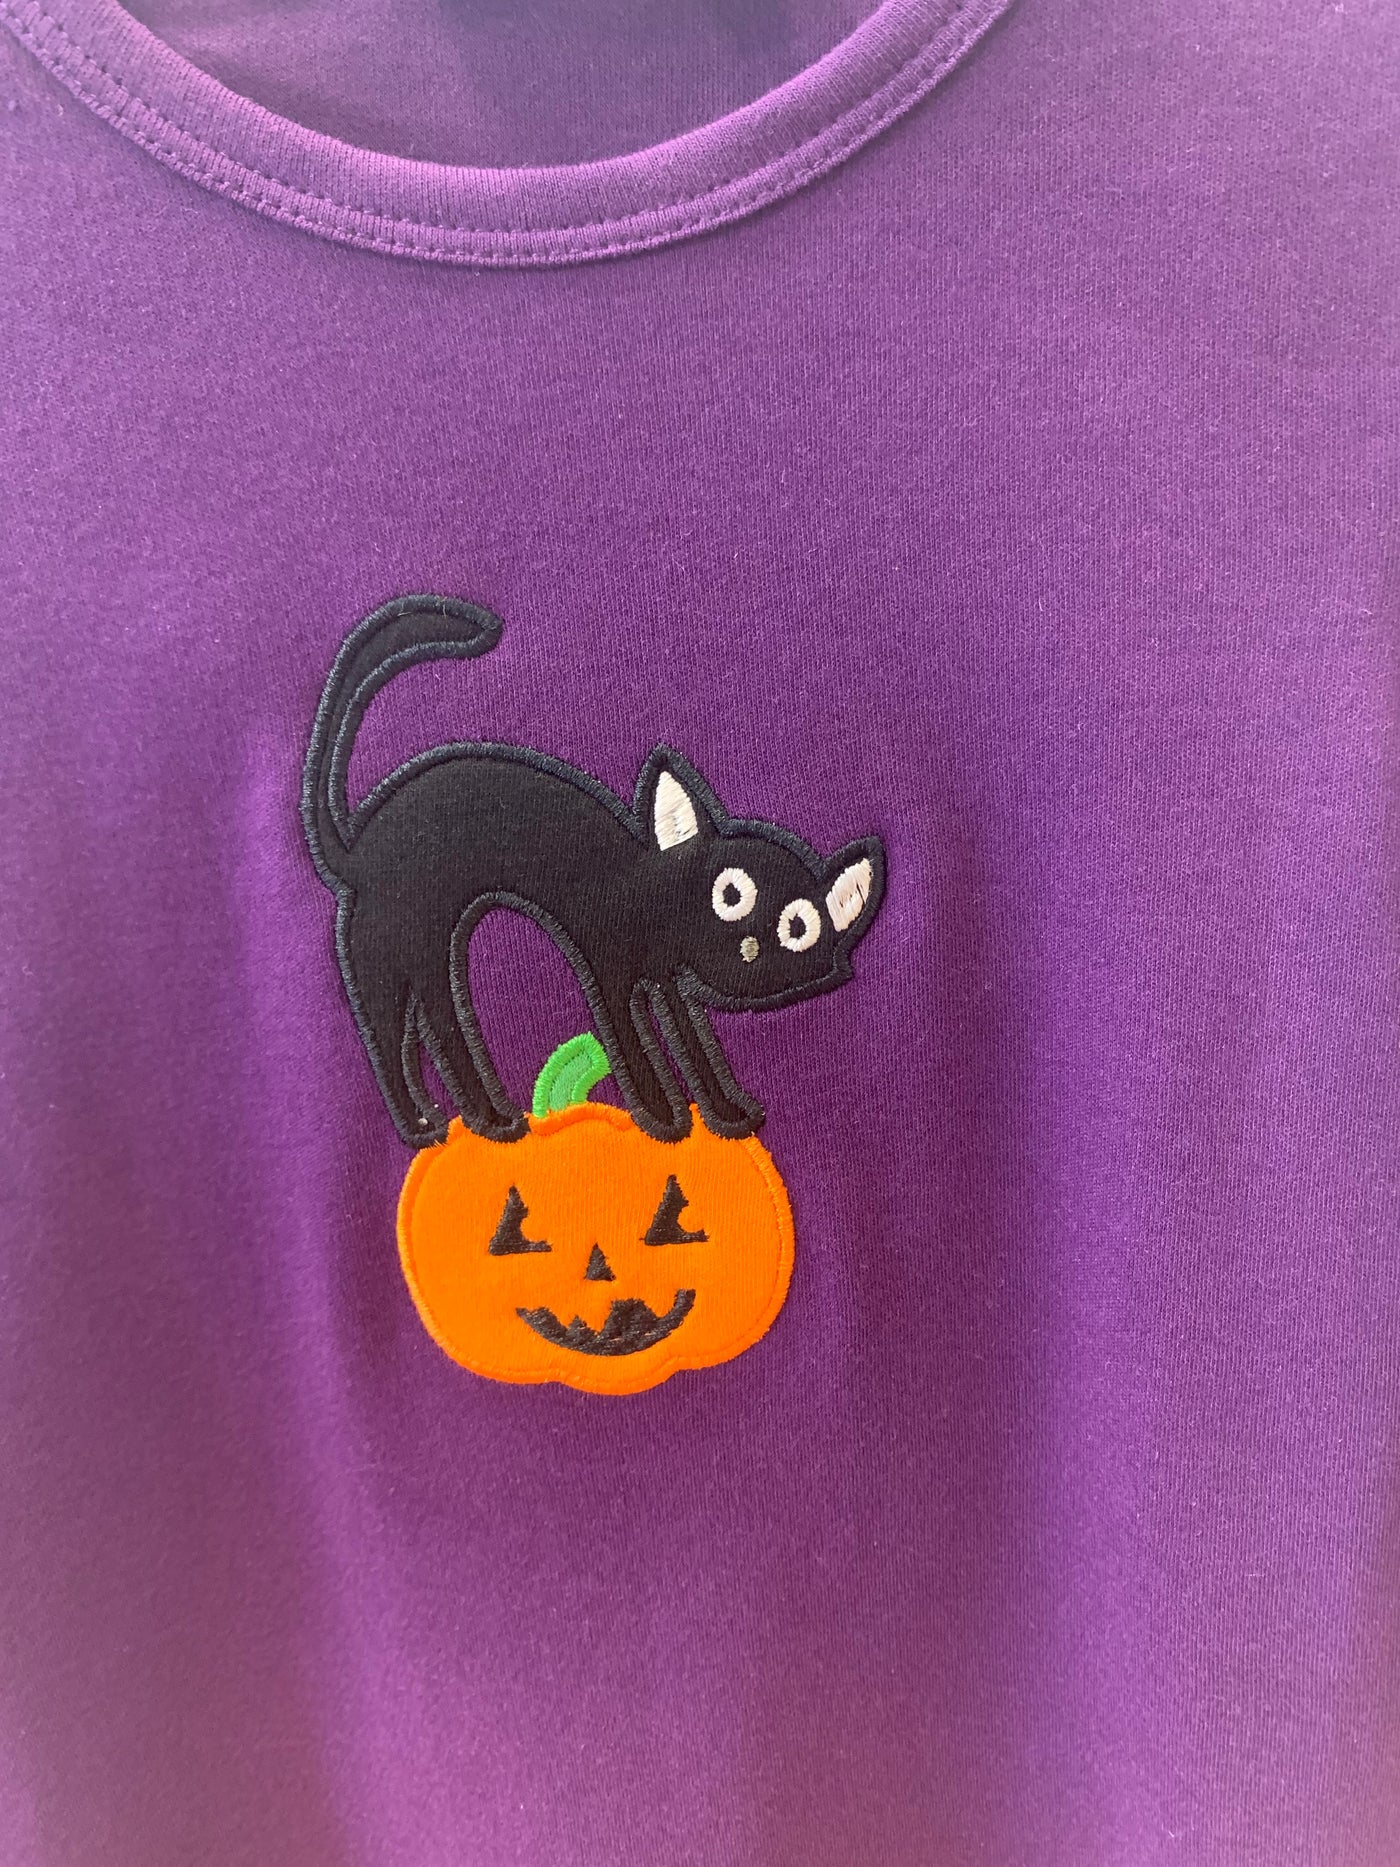 Halloween purple ruffle top